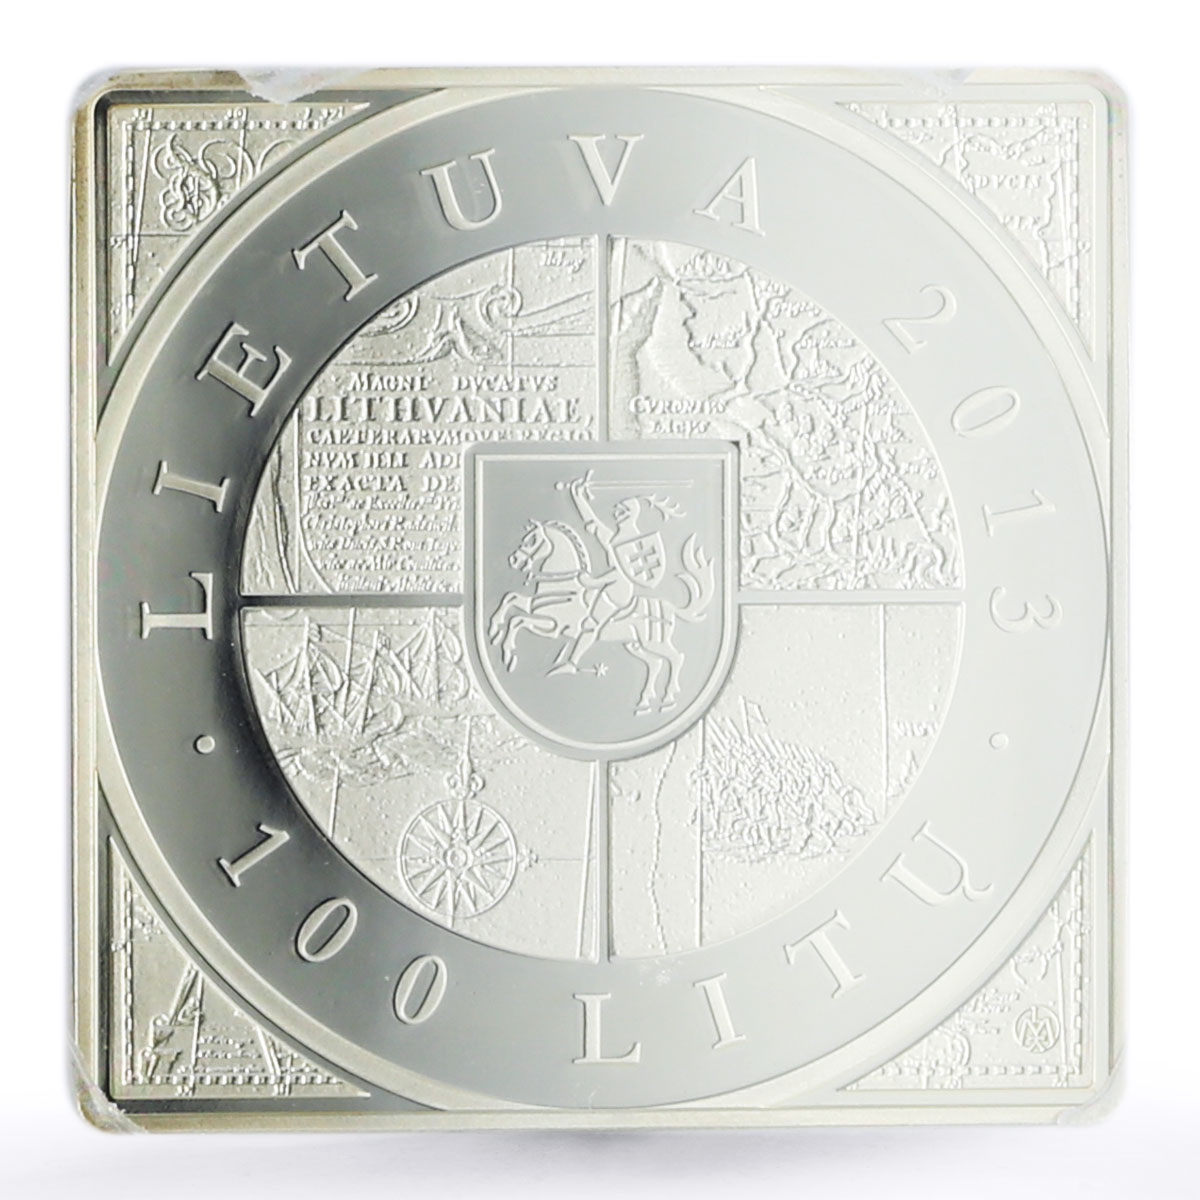 Lithuania 100 litu 1st Map of Grand Duchy PR70 PCGS silver coin 2013